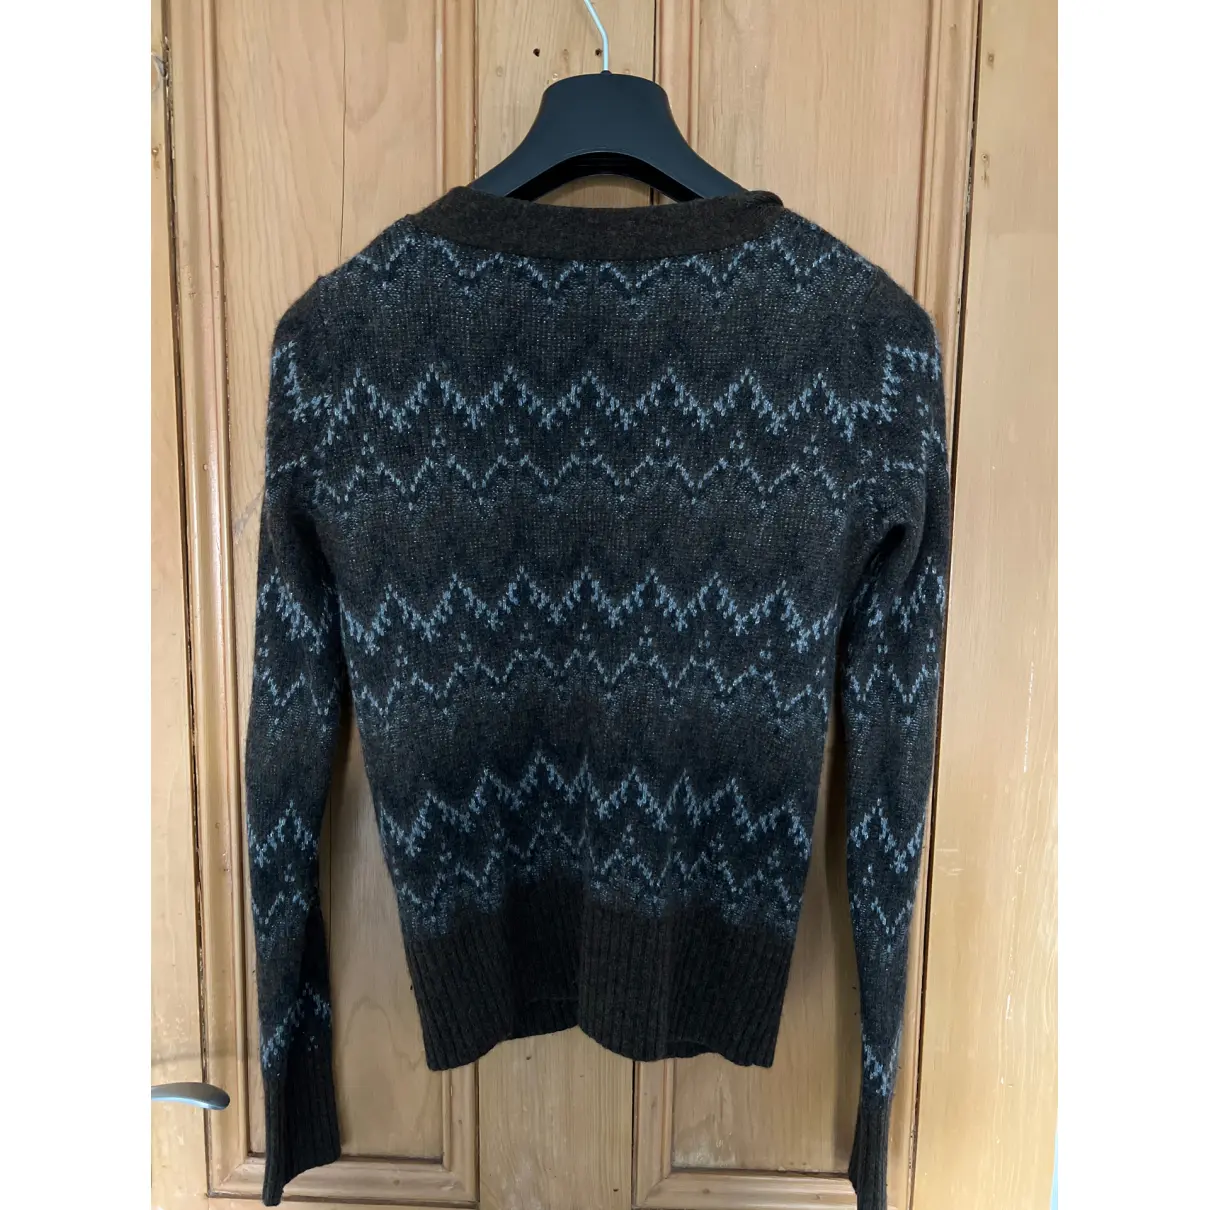 Buy Madewell Wool cardigan online